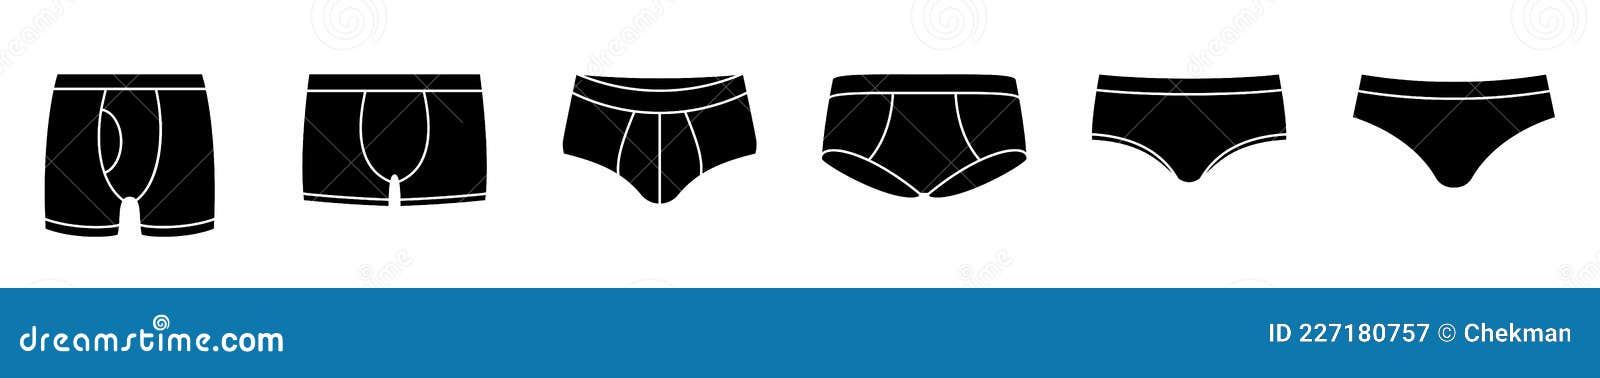 Underpants Icon. Set of Men`s Underwear Icons Stock Vector ...